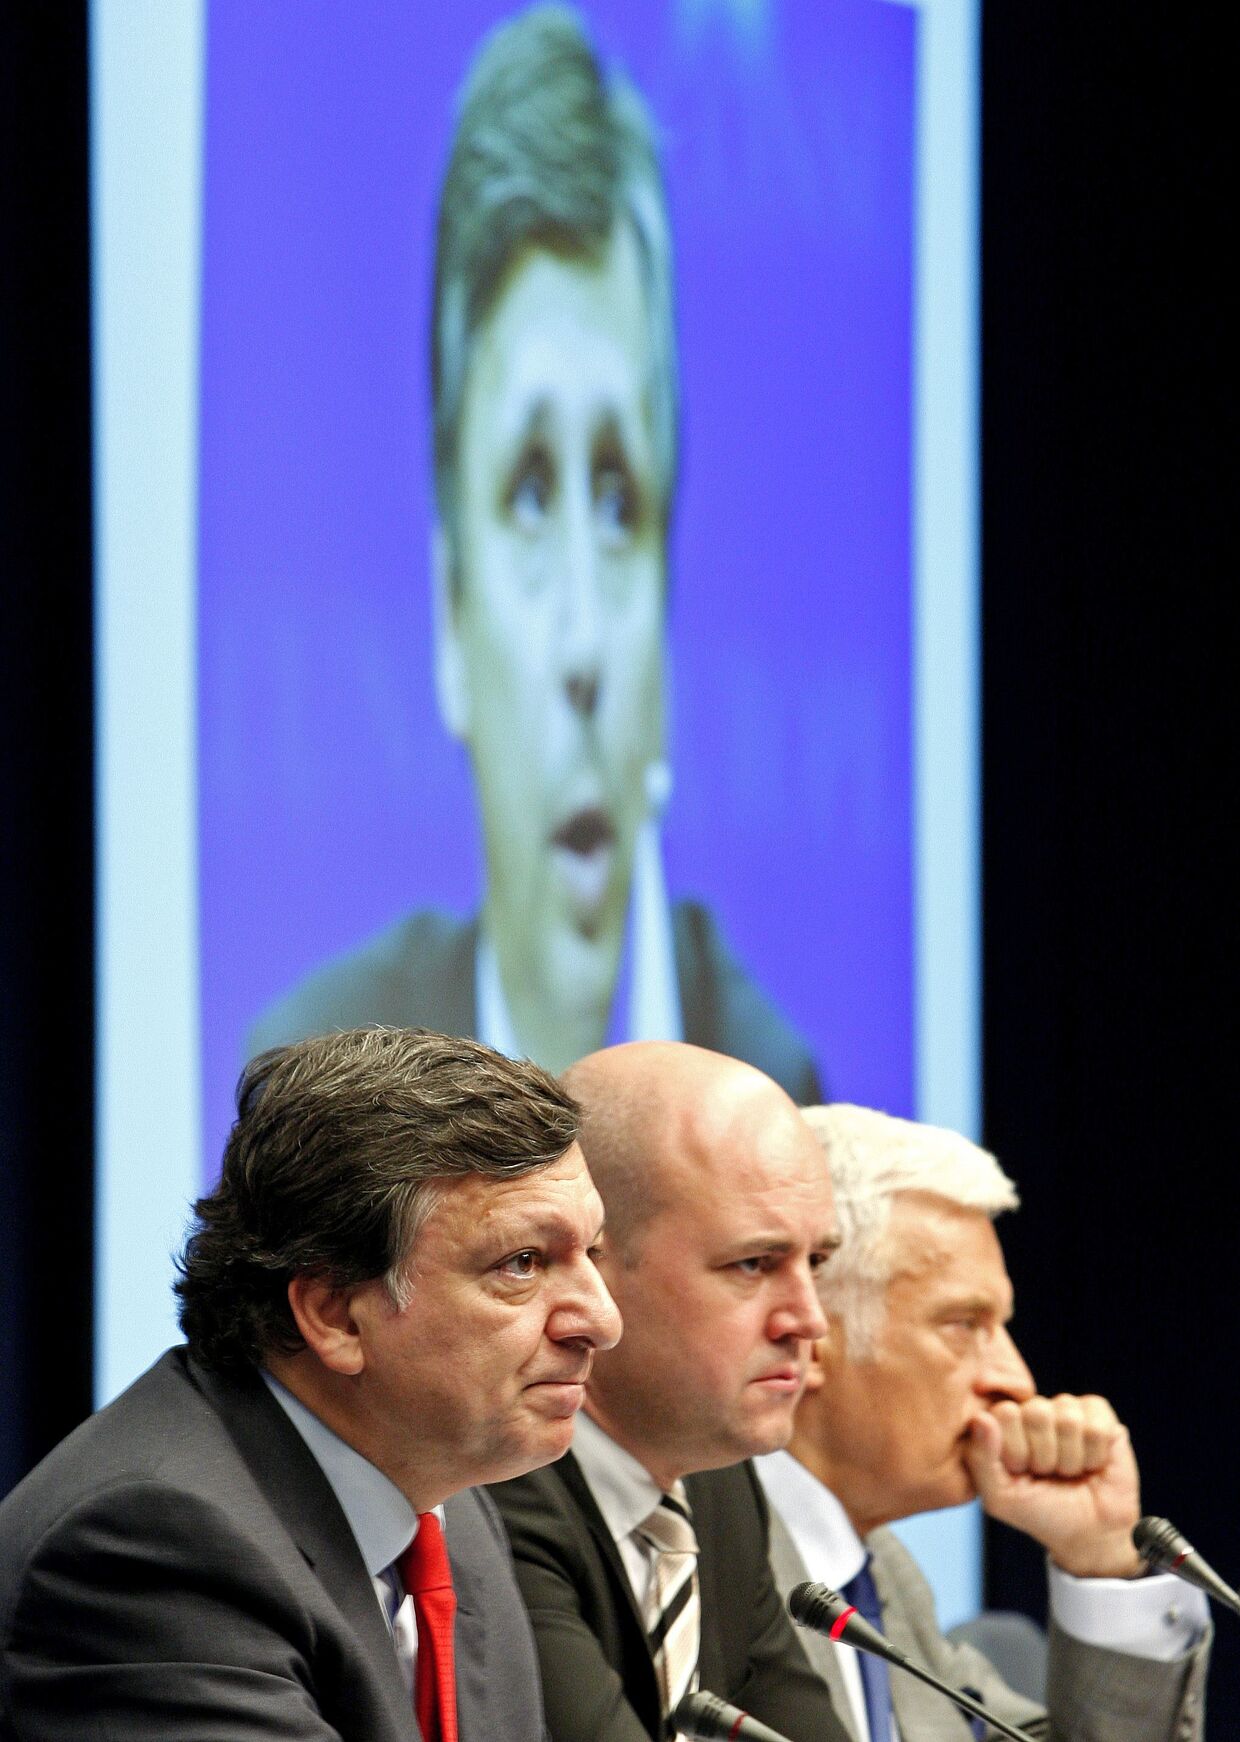 Глава Еврокомиссии Жозе Мануэль Баррозу (Joe Manuel Barroso), президент Европарламента Ежи Бузек (Jerzy Buzek) и Фредрик  Рейнфельд (Fredrik Reinfeld)